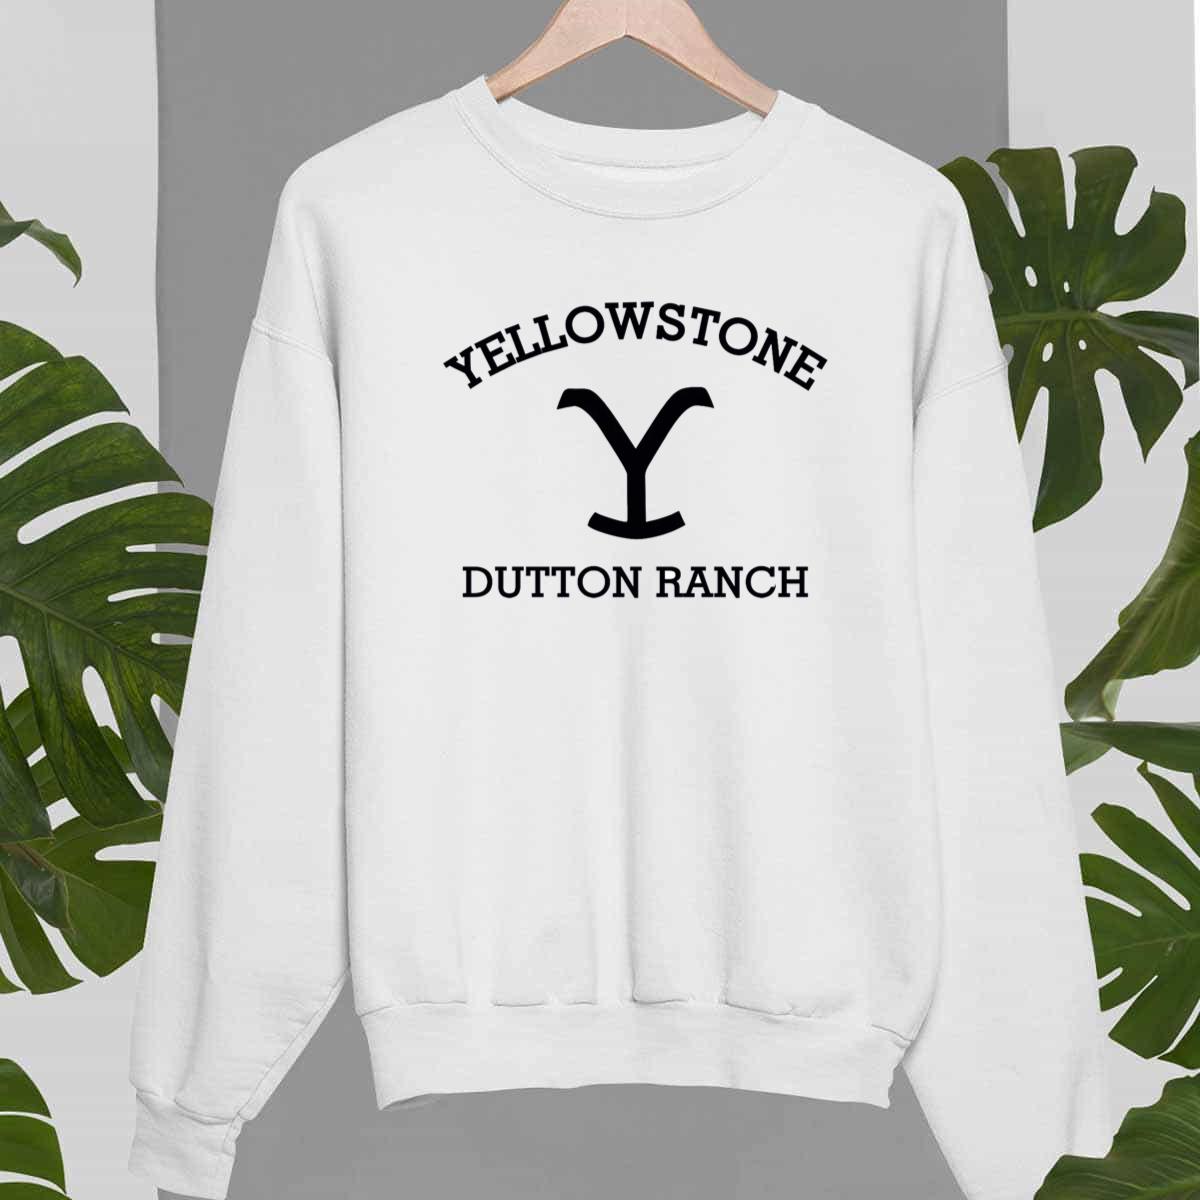 Yellowstone Dutton Ranch Unisex T-Shirt